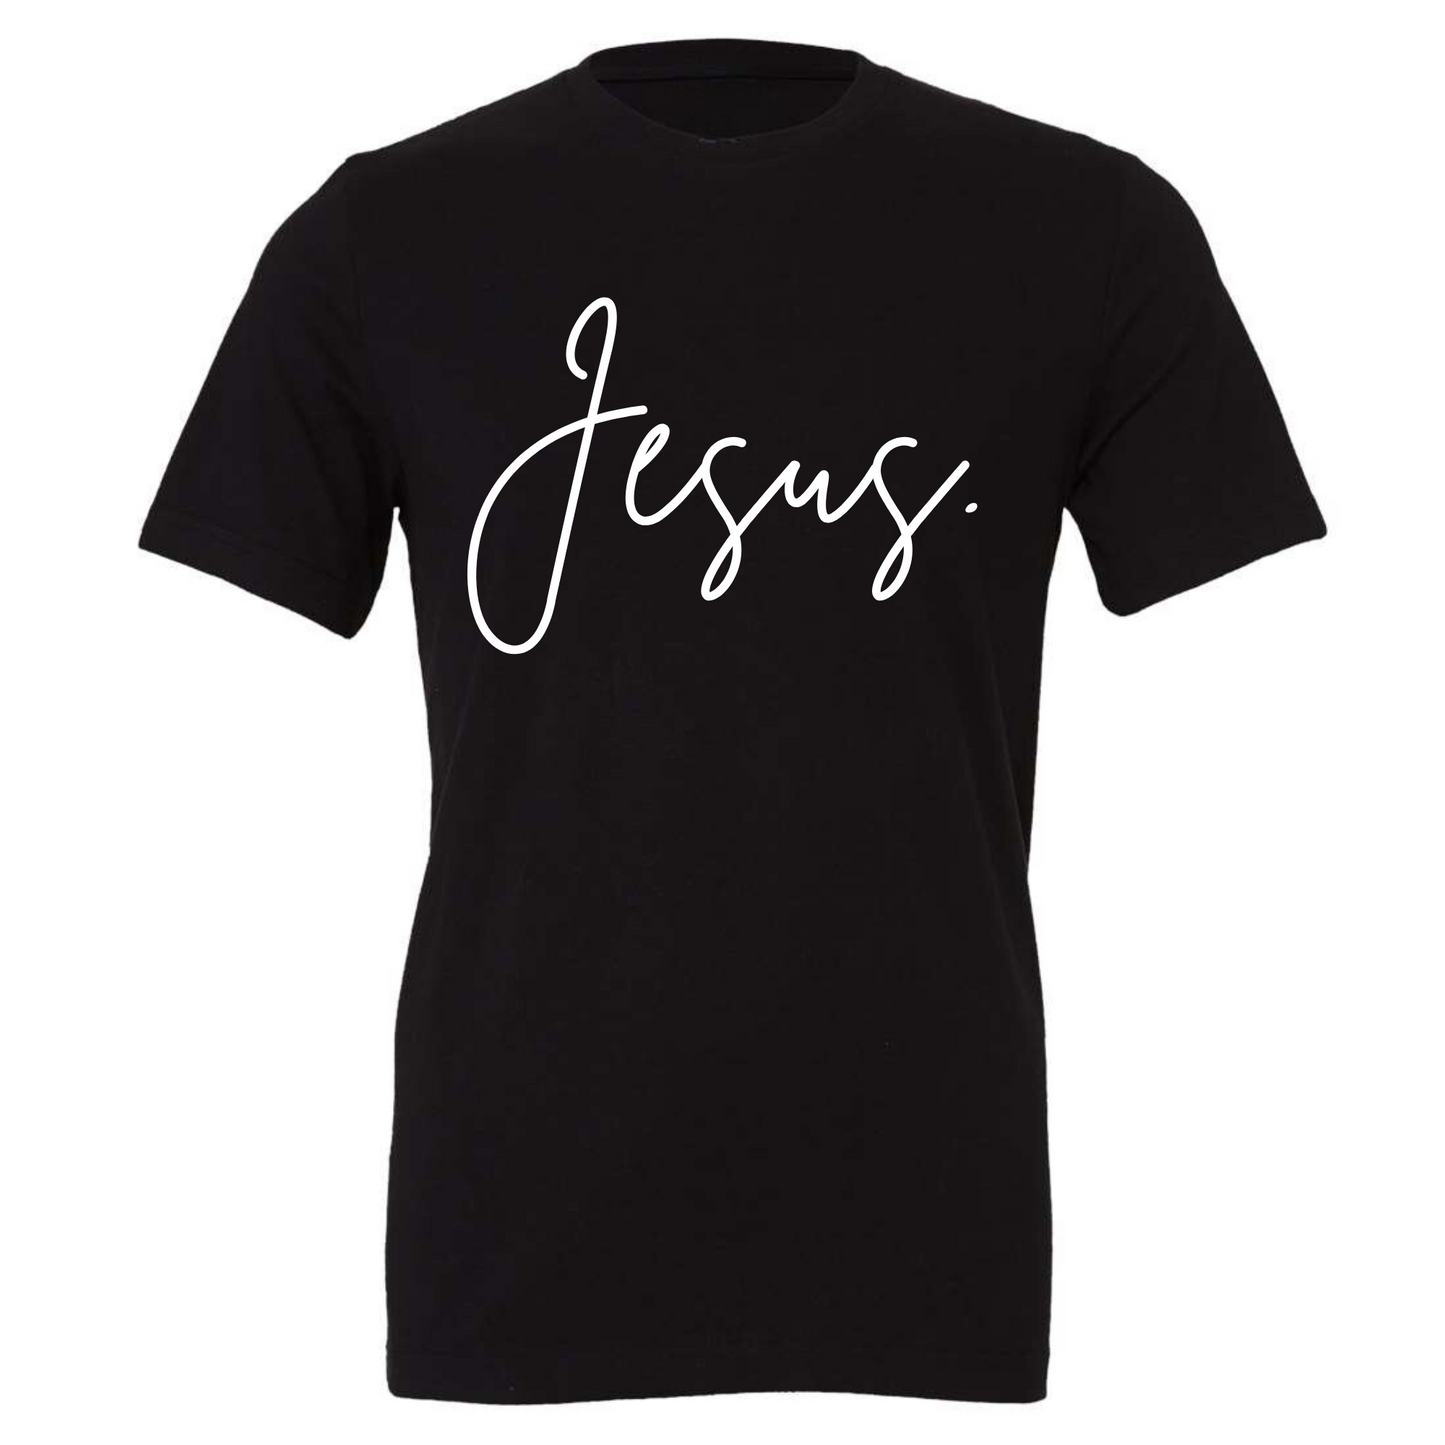 Jesus. T-shirt